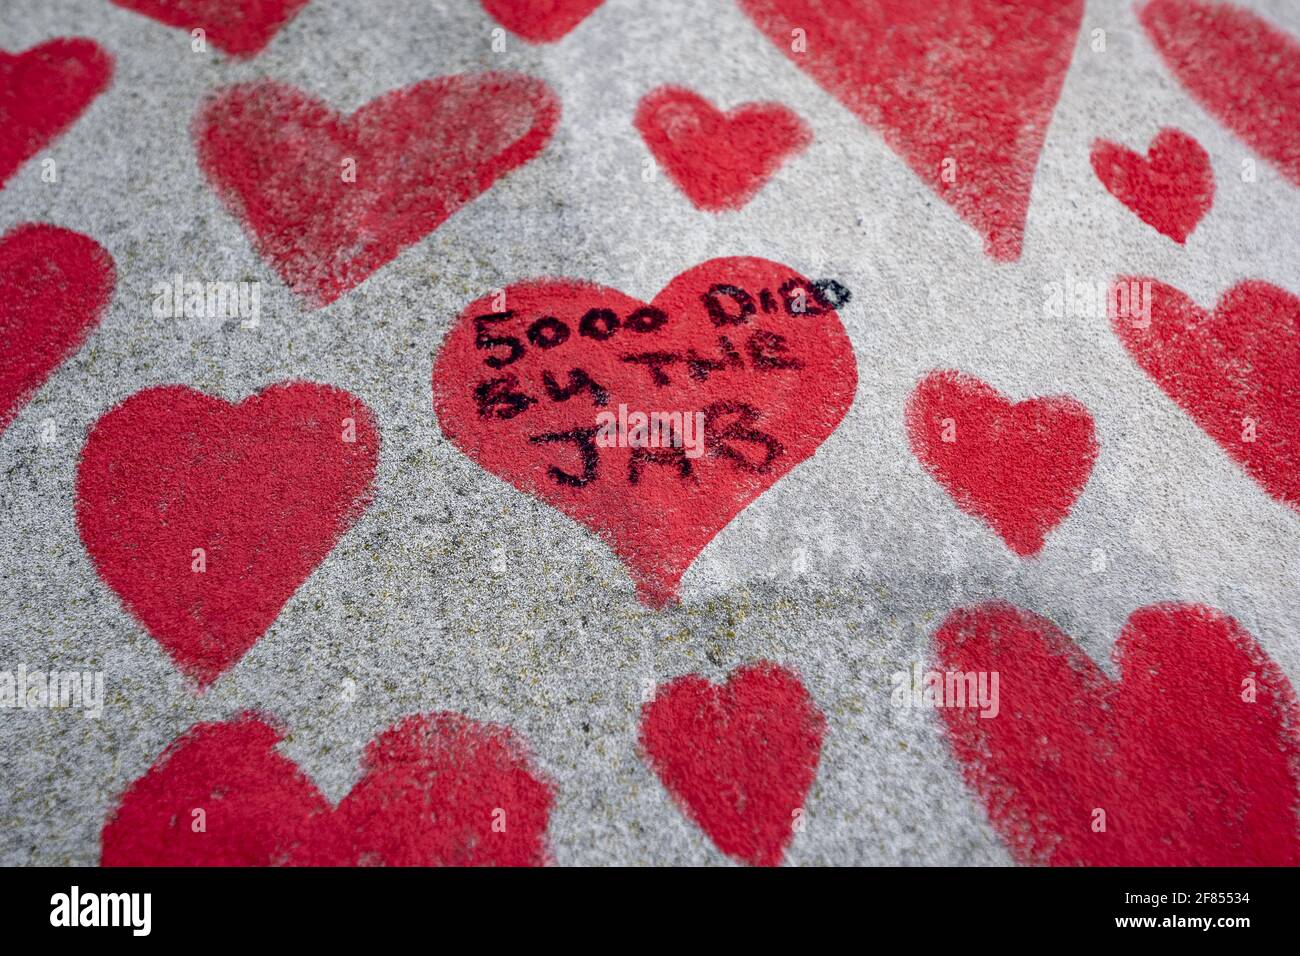 Anti-vaxxer graffiti appears on the wall. Coronavirus: National Covid Memorial Wall of Hearts, Westminster, London, UK. Stock Photo